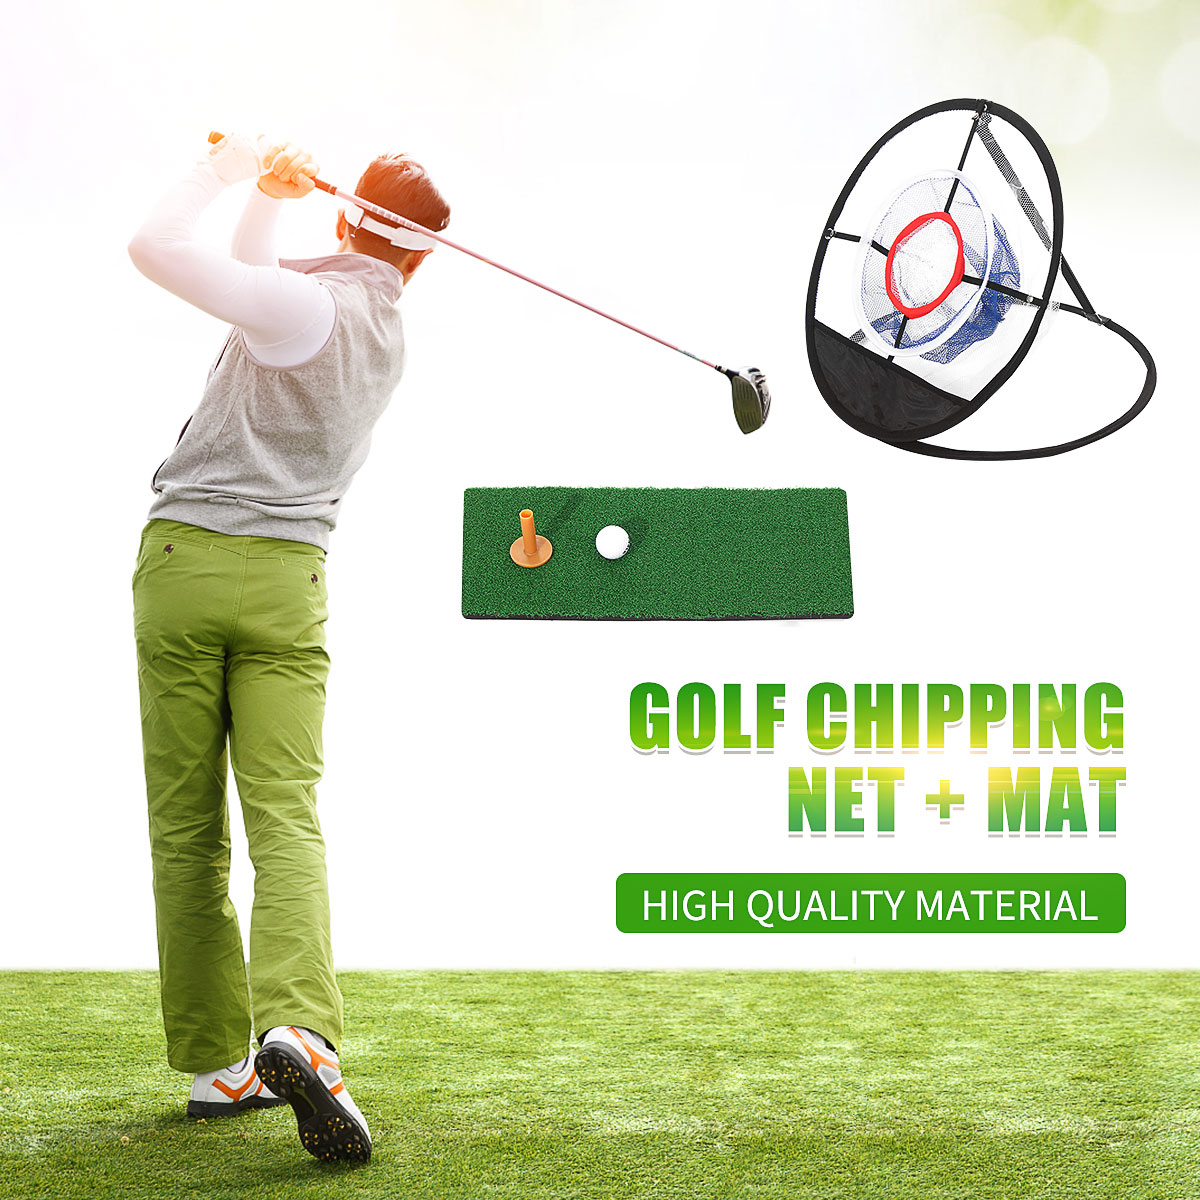 Golf-Chipping-Net-Folding-Mini-Golf-Training-Net-Swing-Pitching-Net-Outdoor-Sport-with-Golf-Mat-1696704-1